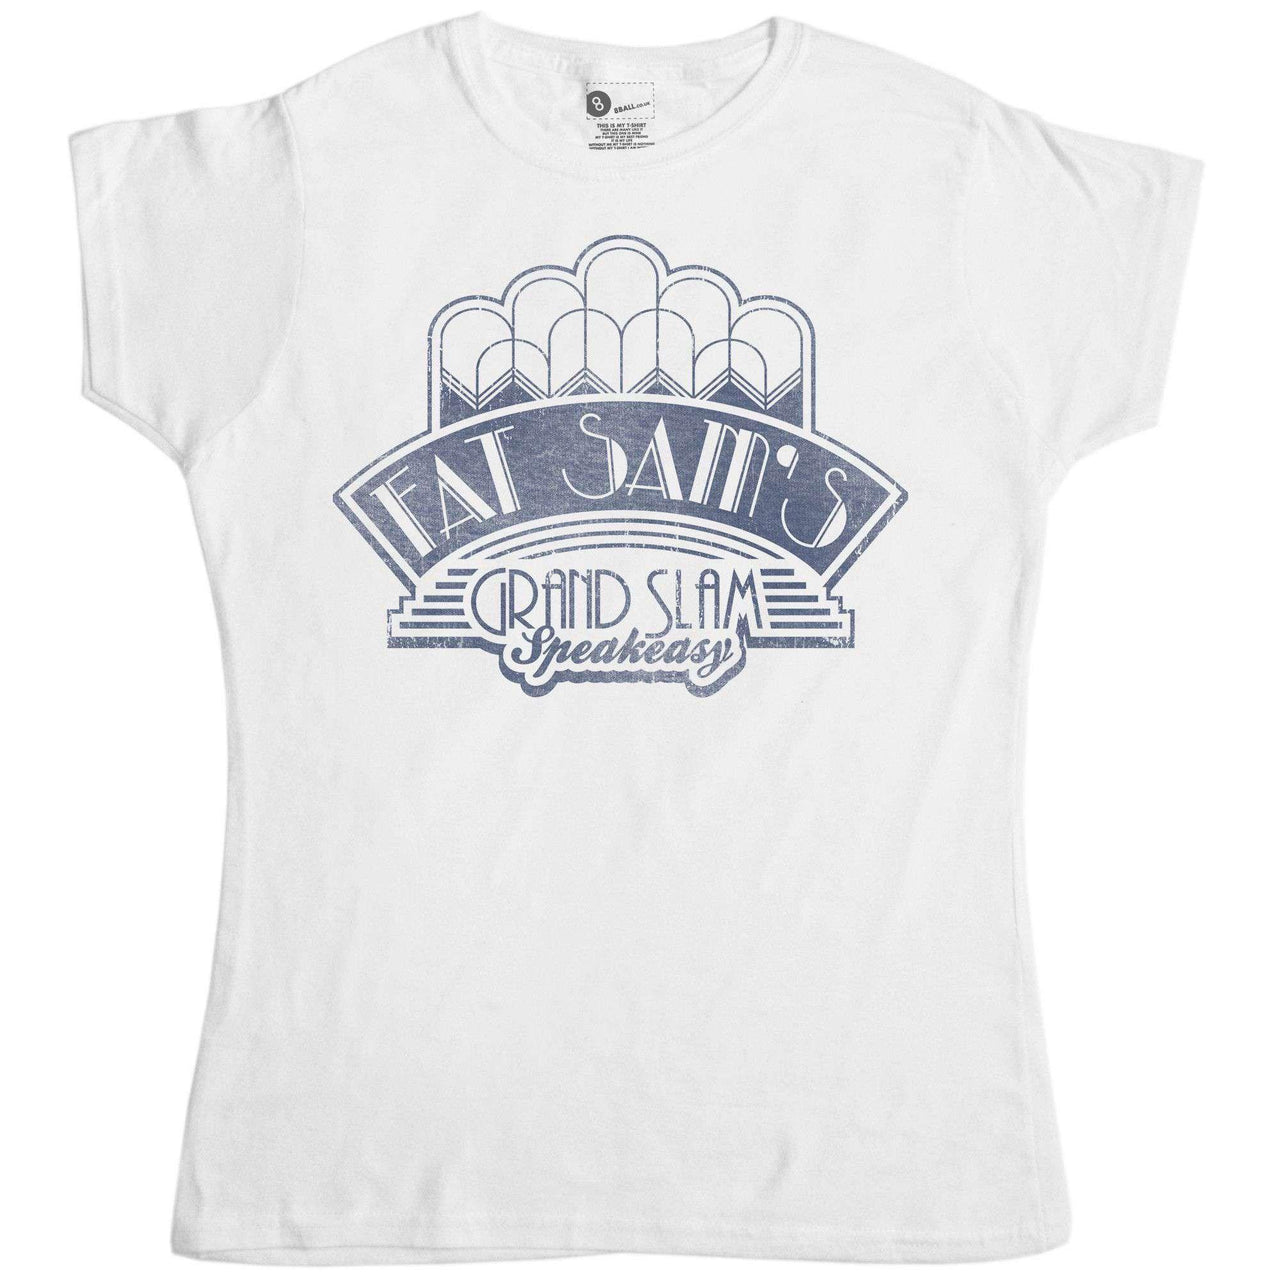 Fat Sam's Grand Slam Speakeasy Womens Style T-Shirt 8Ball